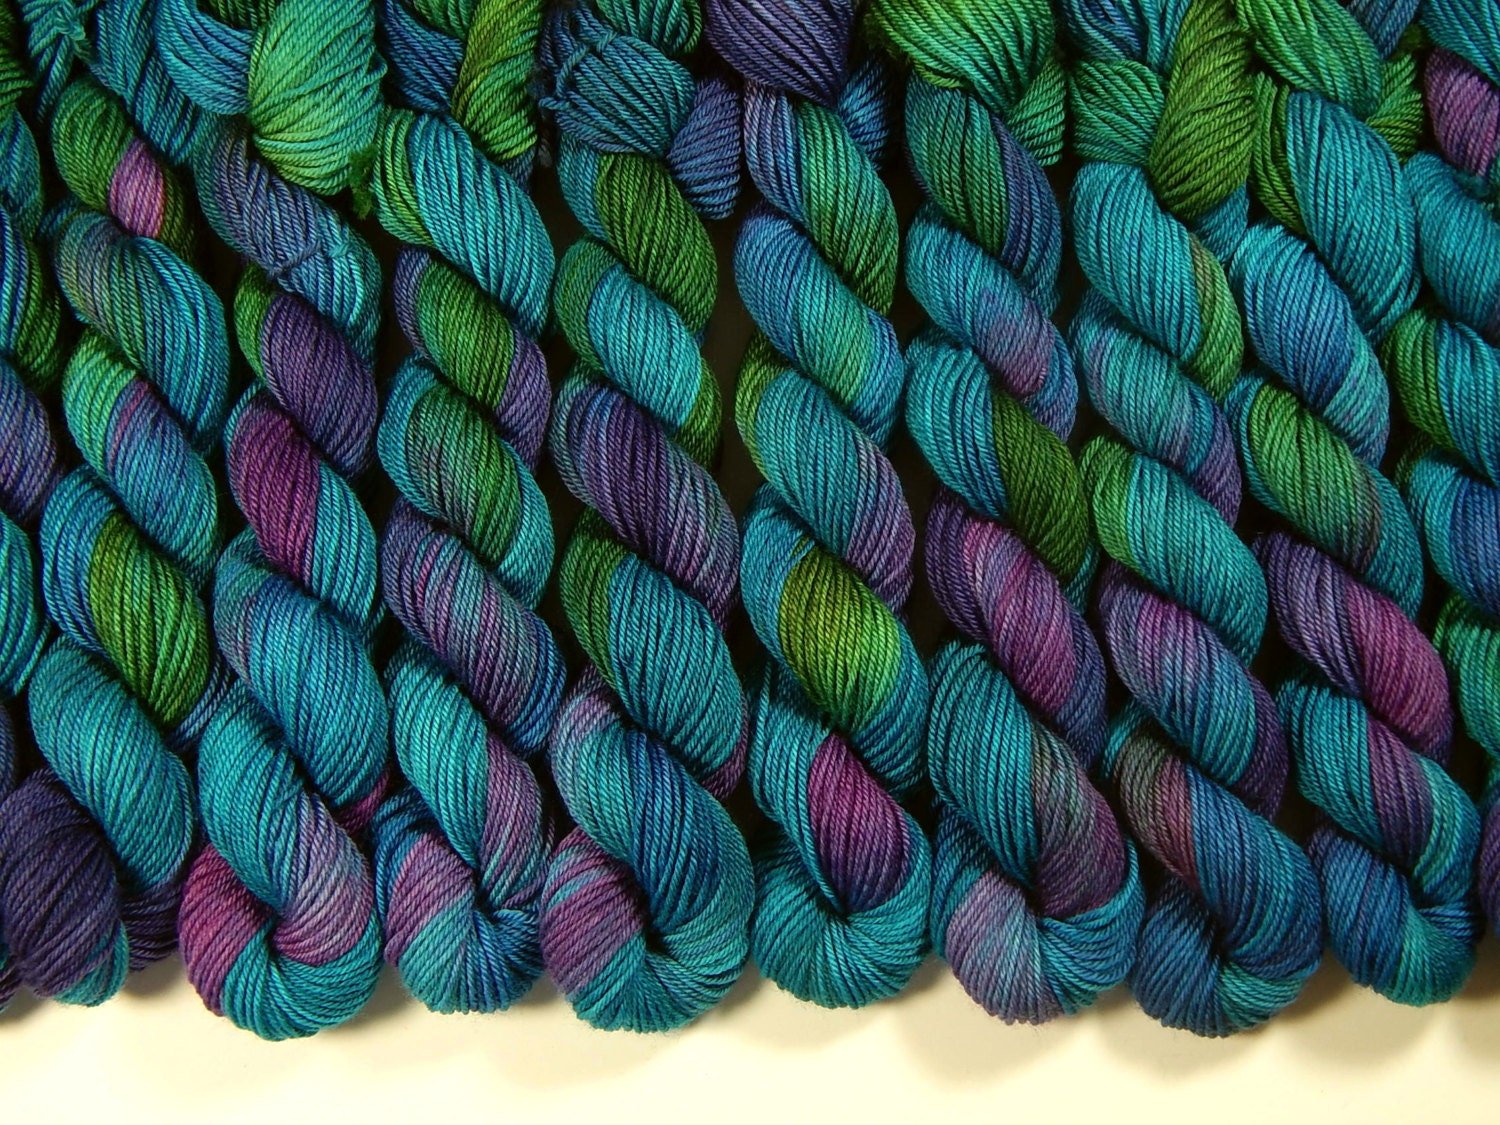 Mini Skeins Hand Dyed Yarn, Sock Weight Superwash Merino Wool - Aegean Multi - Indie Fingering Knitting Yarn, Vibrant Blue Green Turquoise